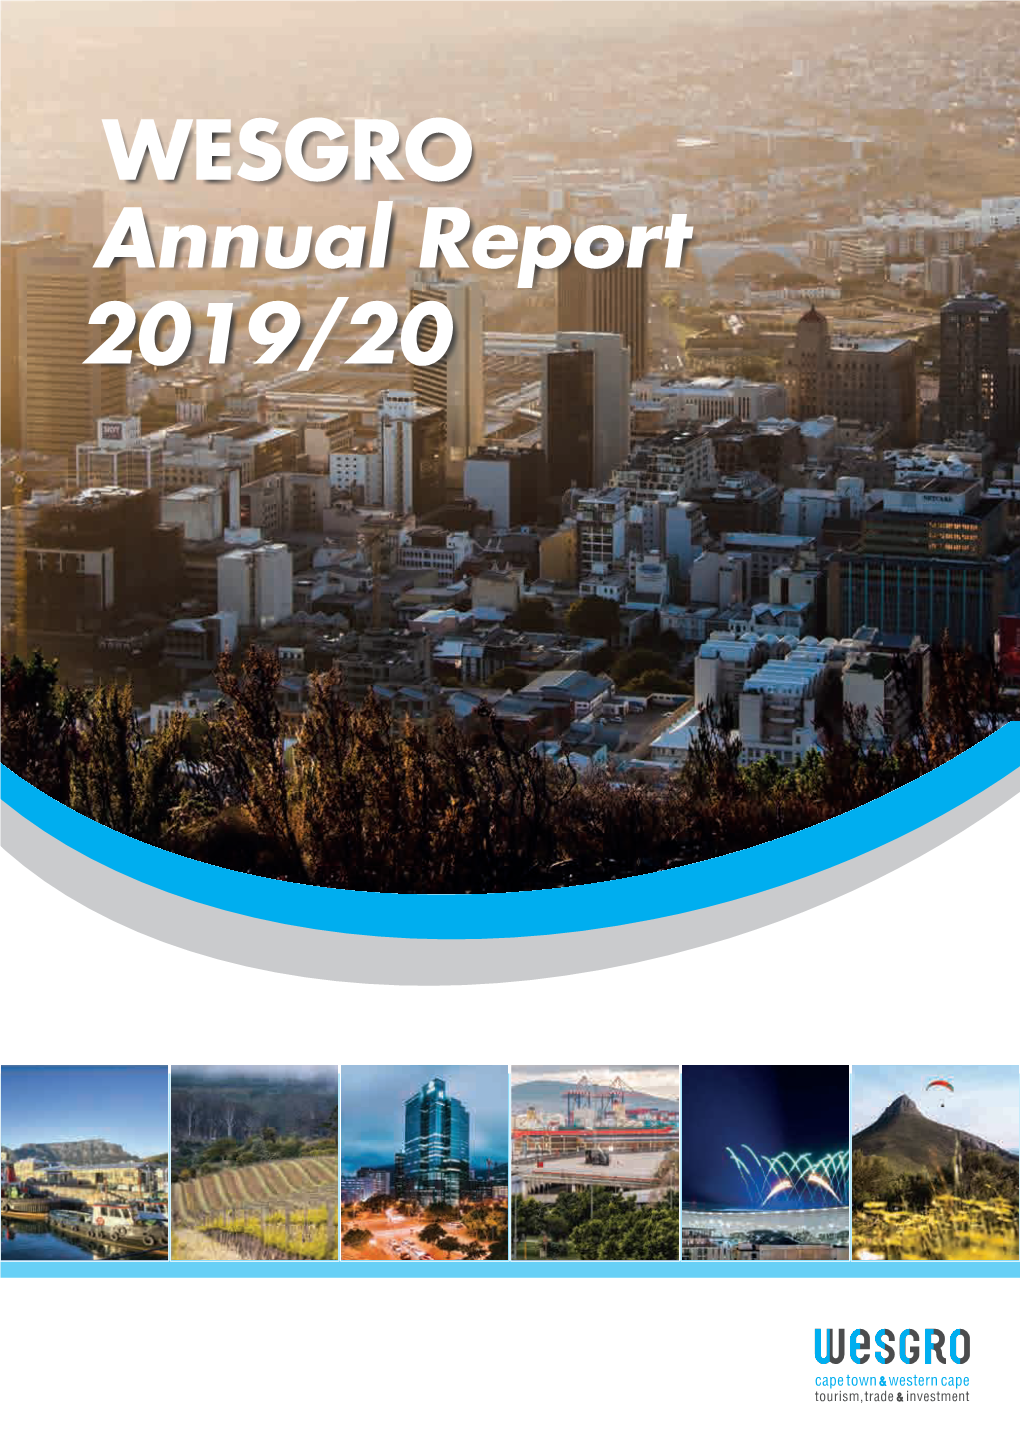 WESGROWESGRO Annualannual Reportreport 2019/202019/20